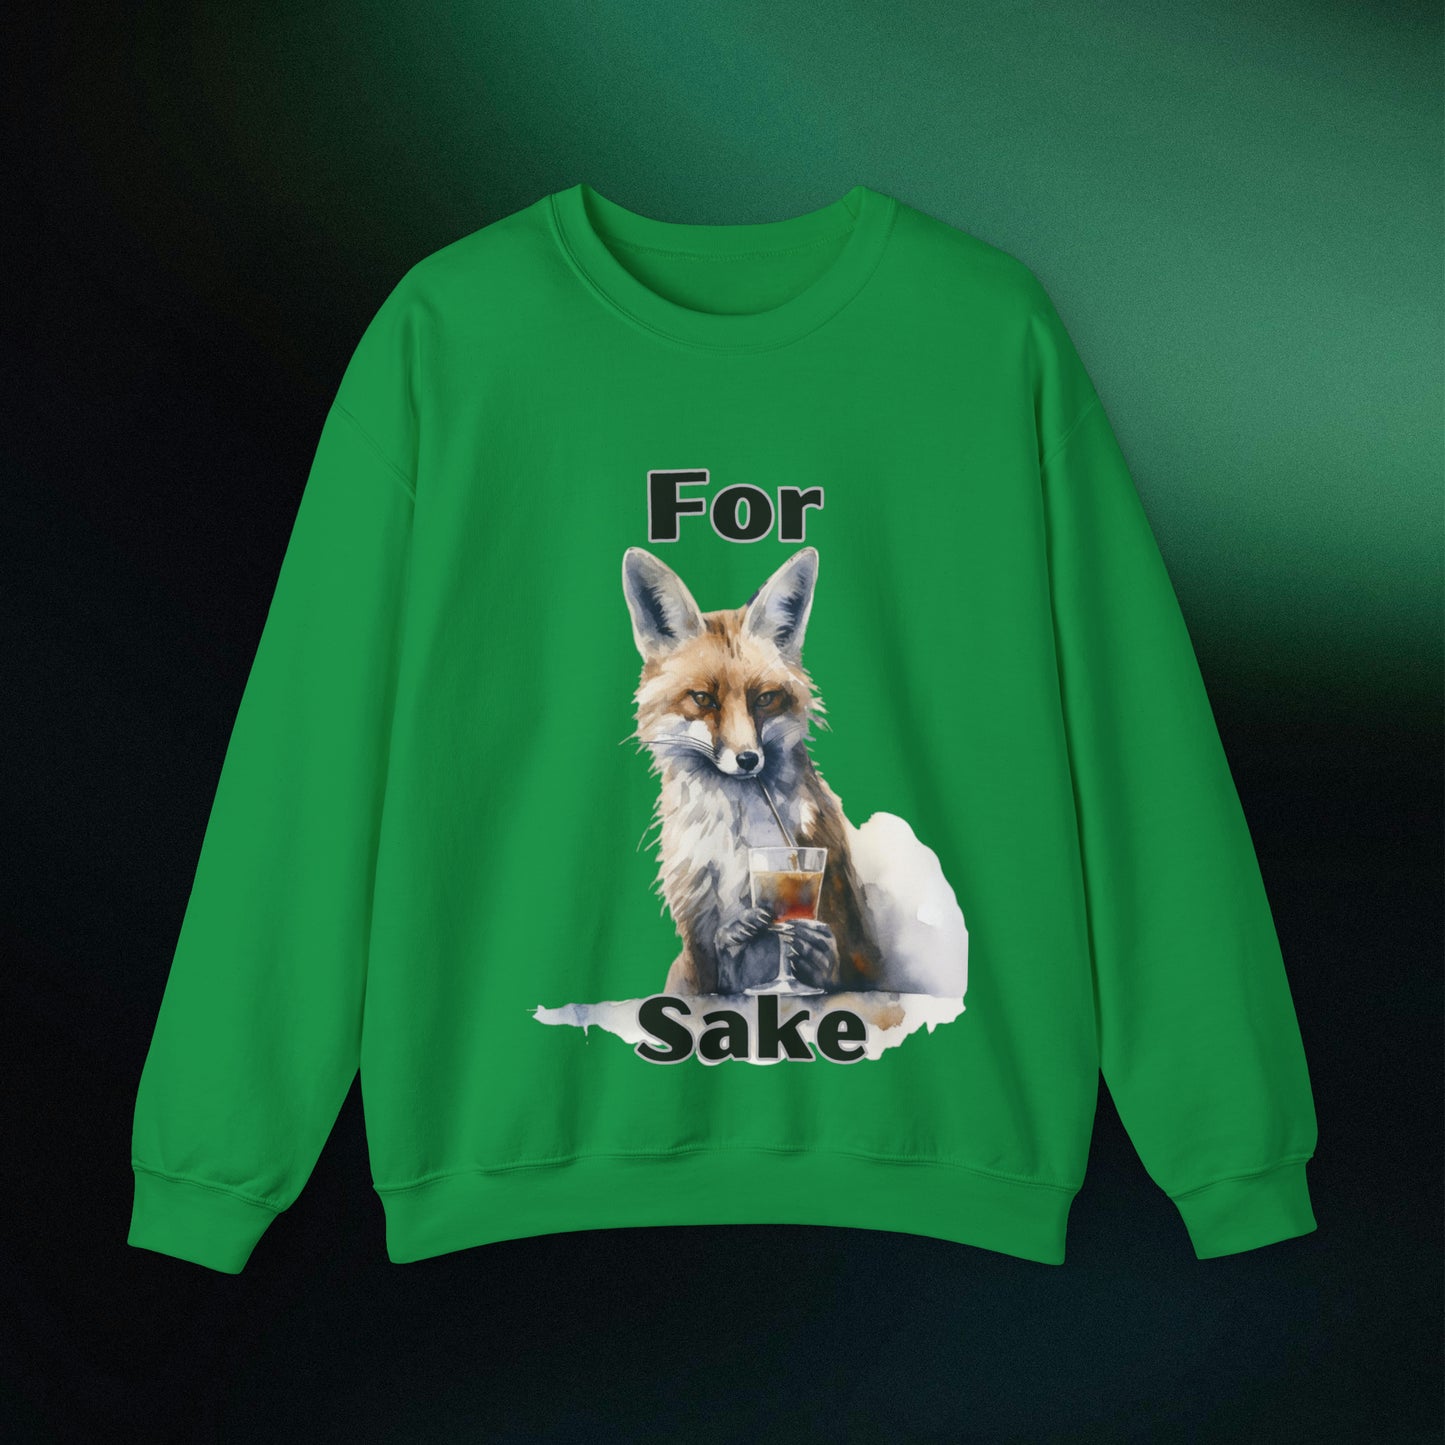 For Fox Sake: Funny Fox Sweatshirt | Gift for Fox Lover | Animal Lover Shirt - Cute Fox Gift for Nature Enthusiasts Sweatshirt S Irish Green 